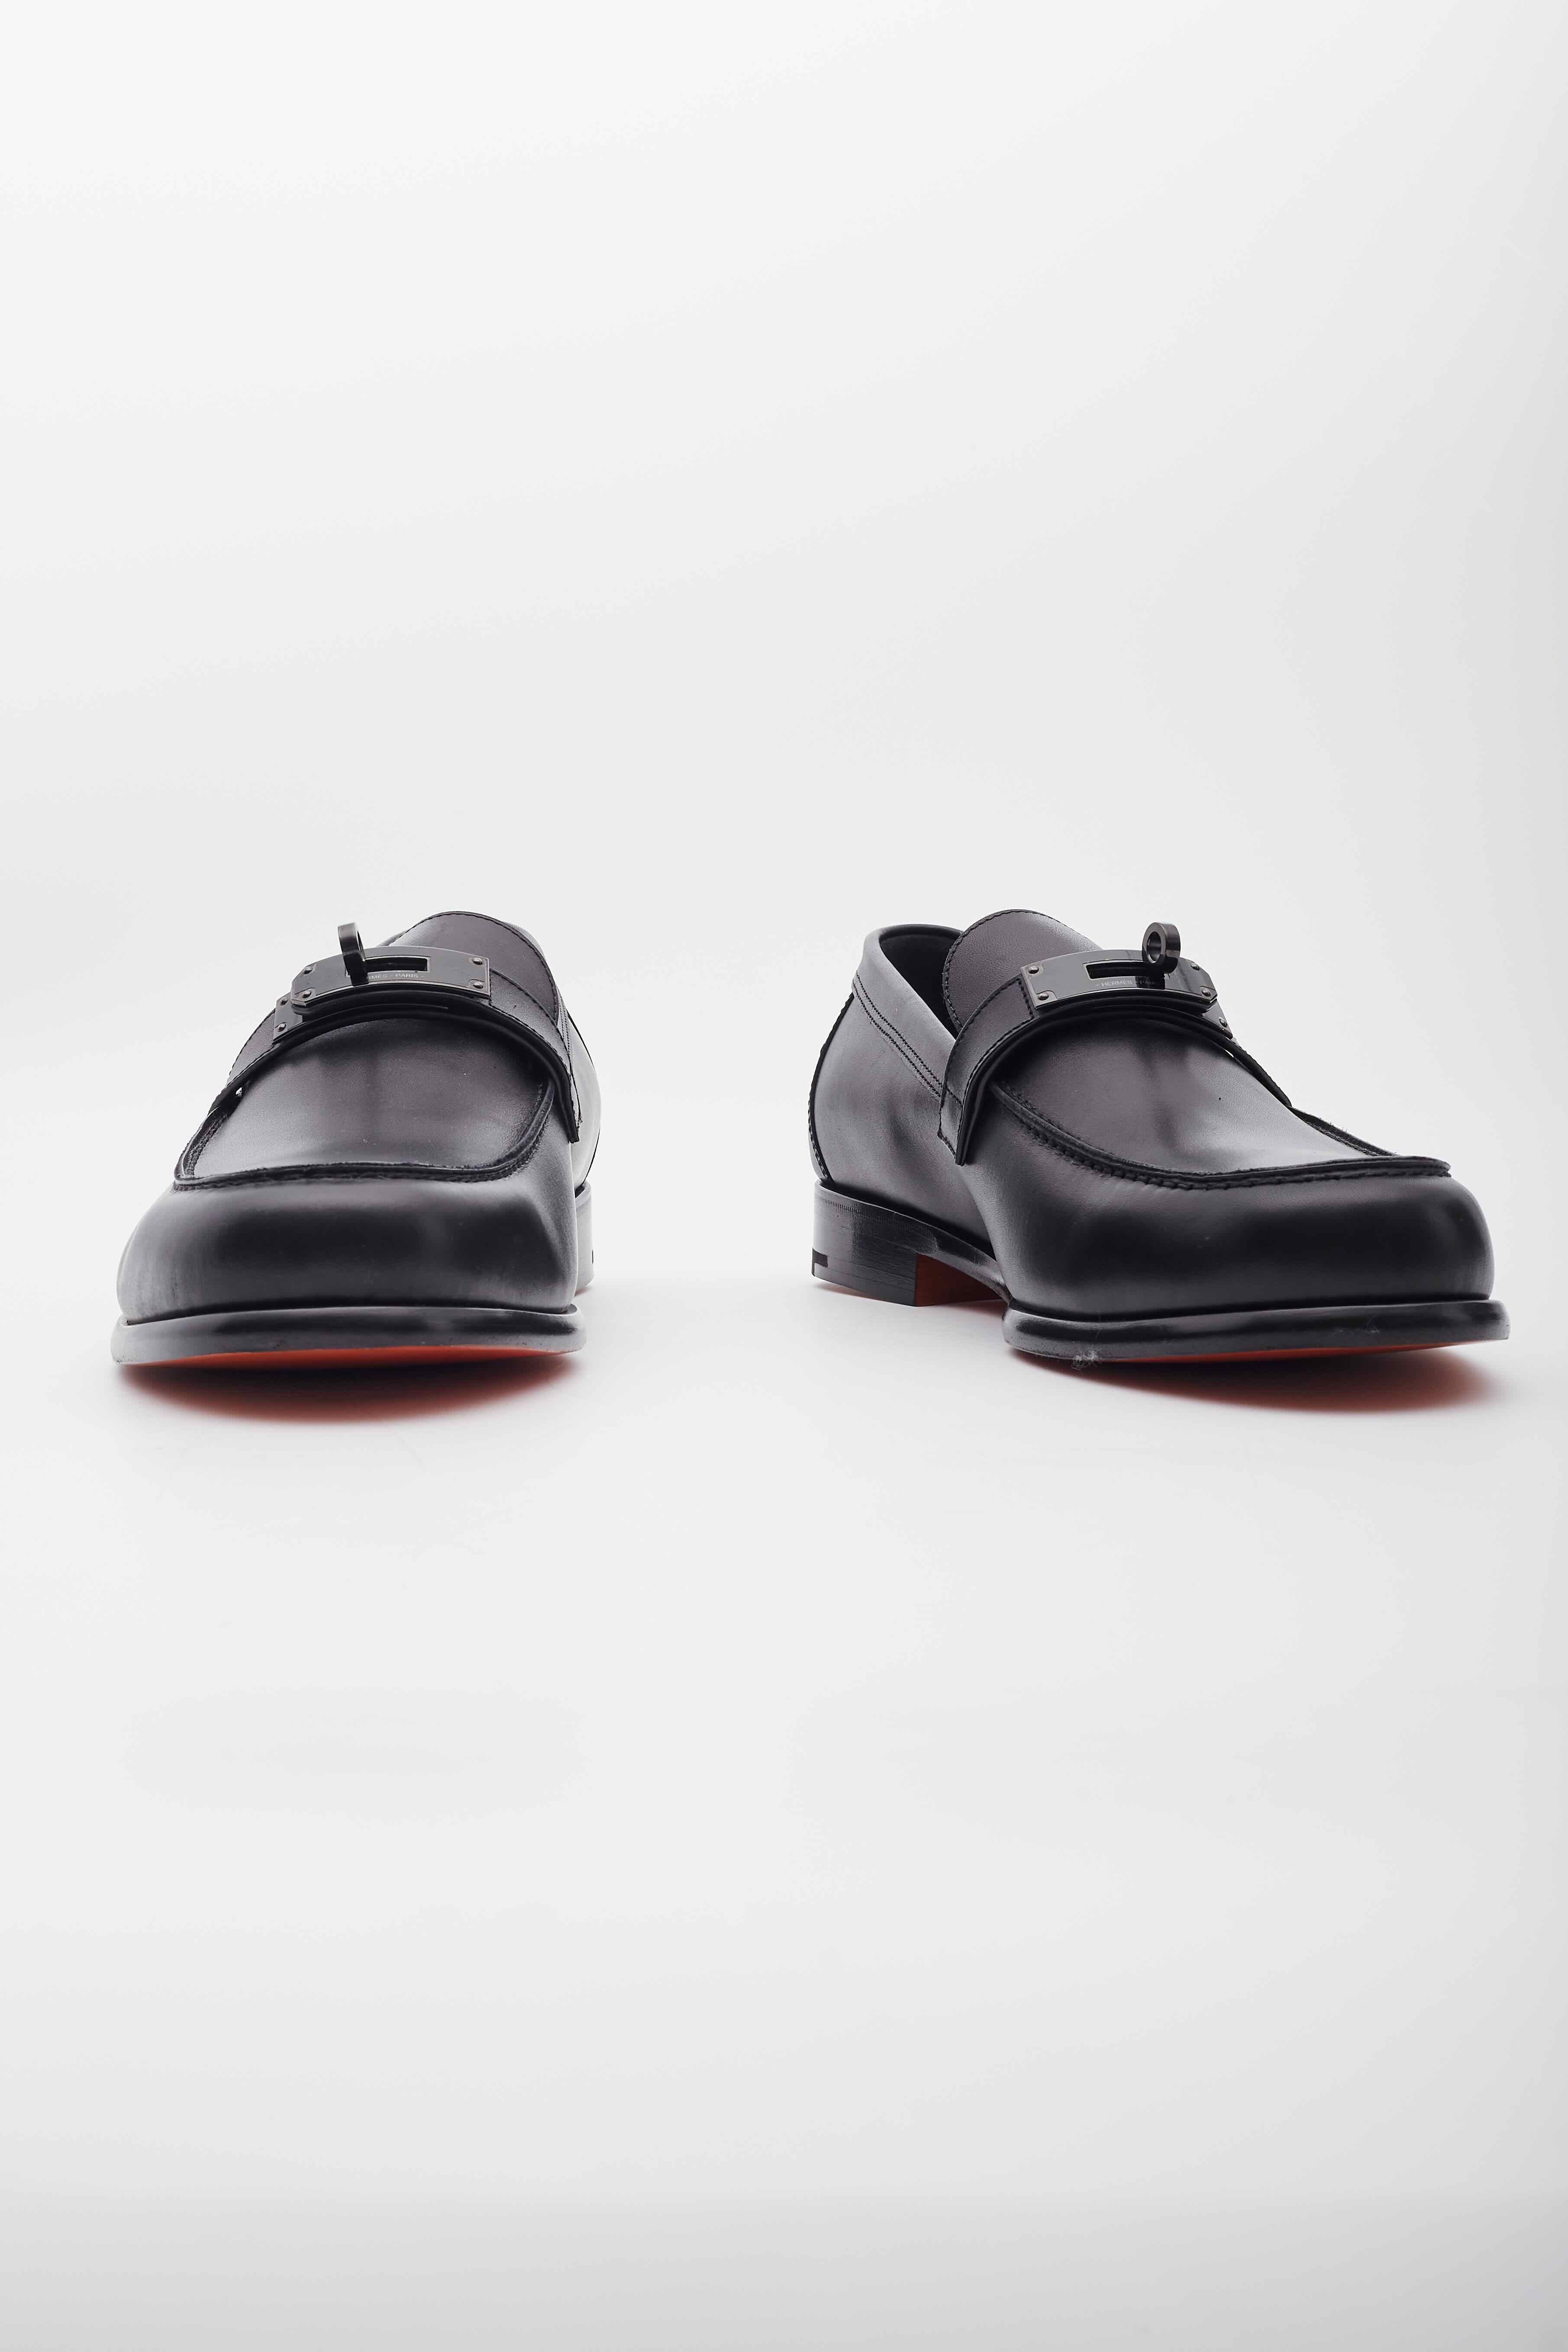 Hermes Calfskin Black Plated Kelly Buckle Destin Loafers (EU 44) For Sale 3